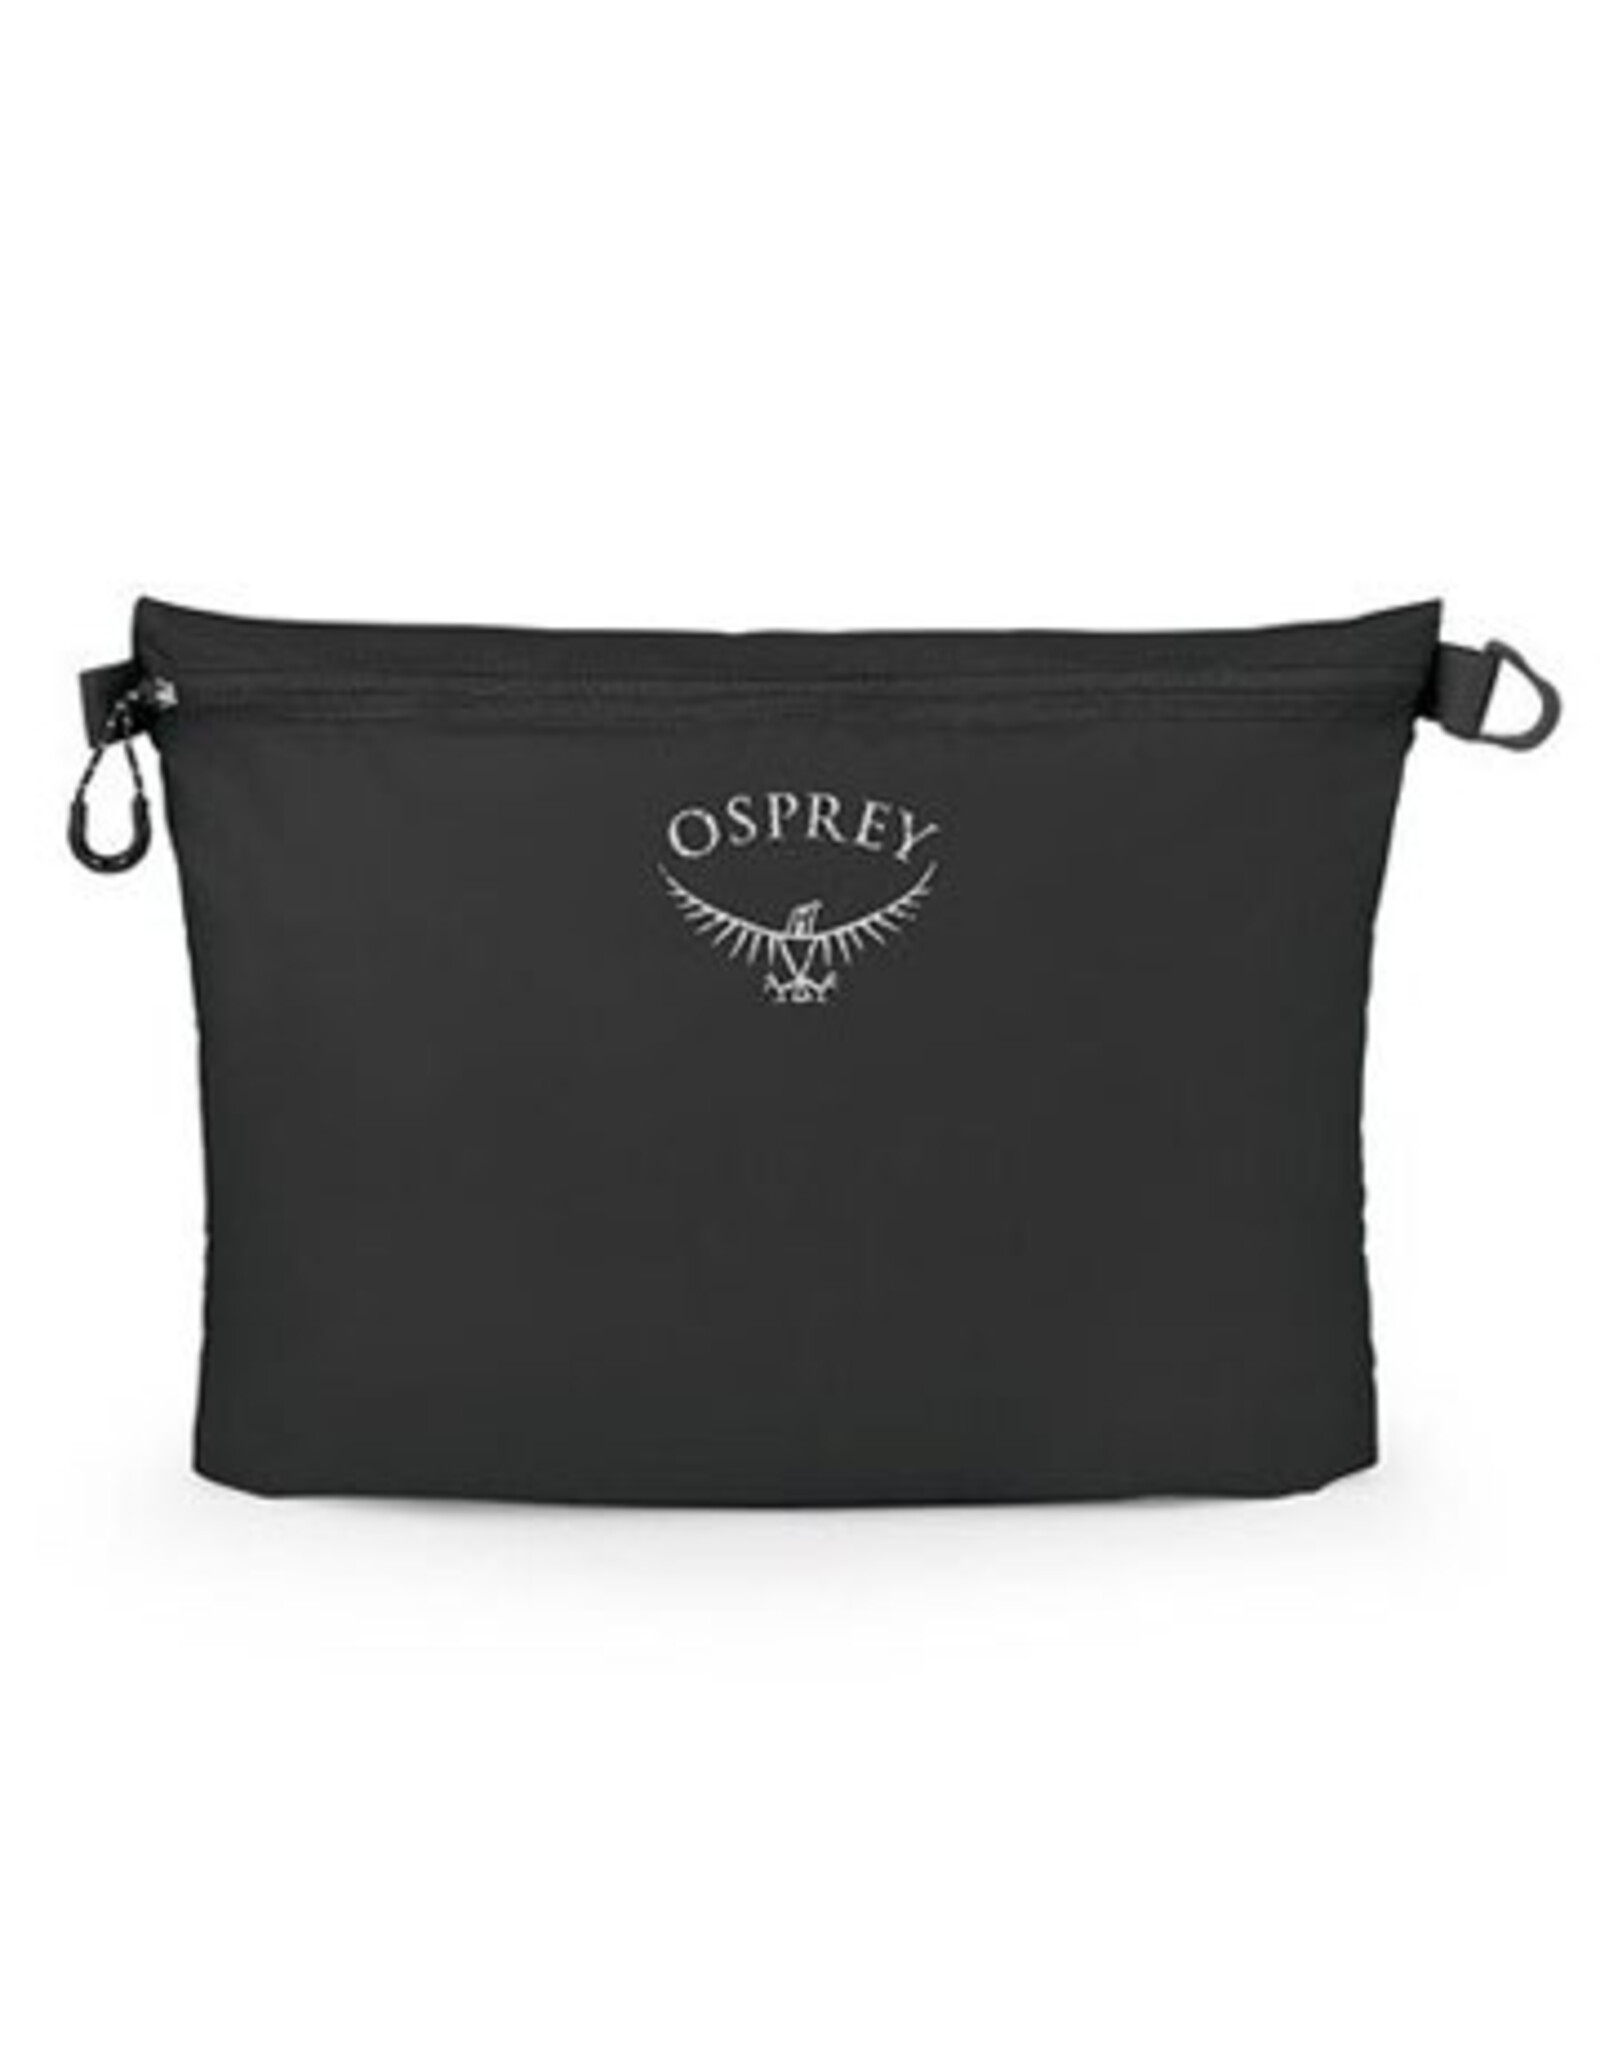 Osprey Packs Osprey Ultralight Zipper Sack Black Large